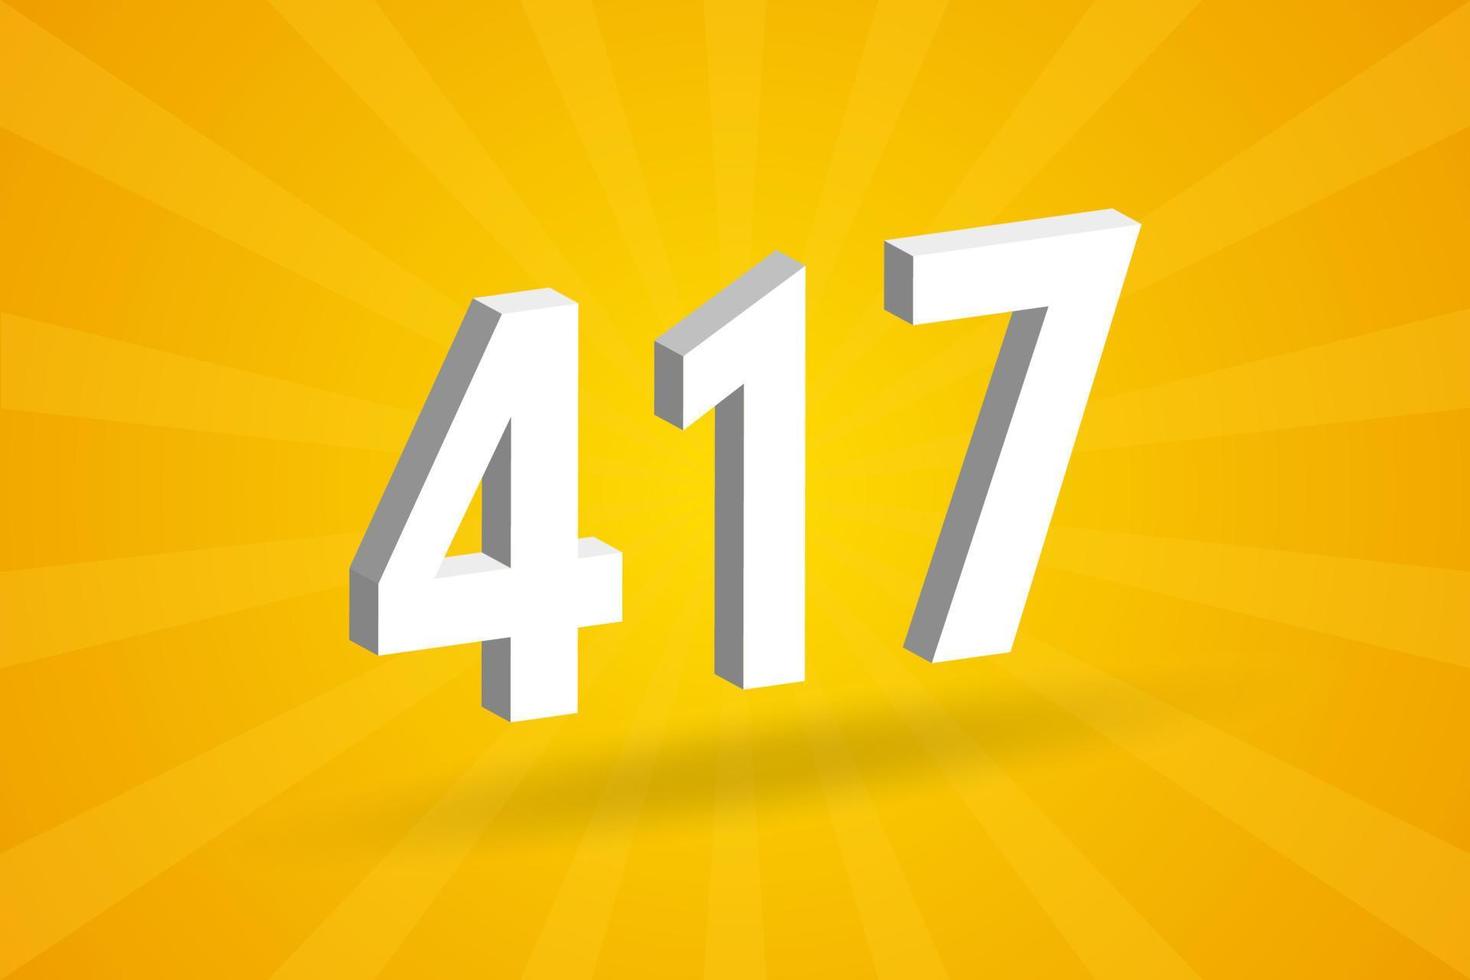 3d 417 siffra font alfabet. vit 3d siffra 417 med gul bakgrund vektor